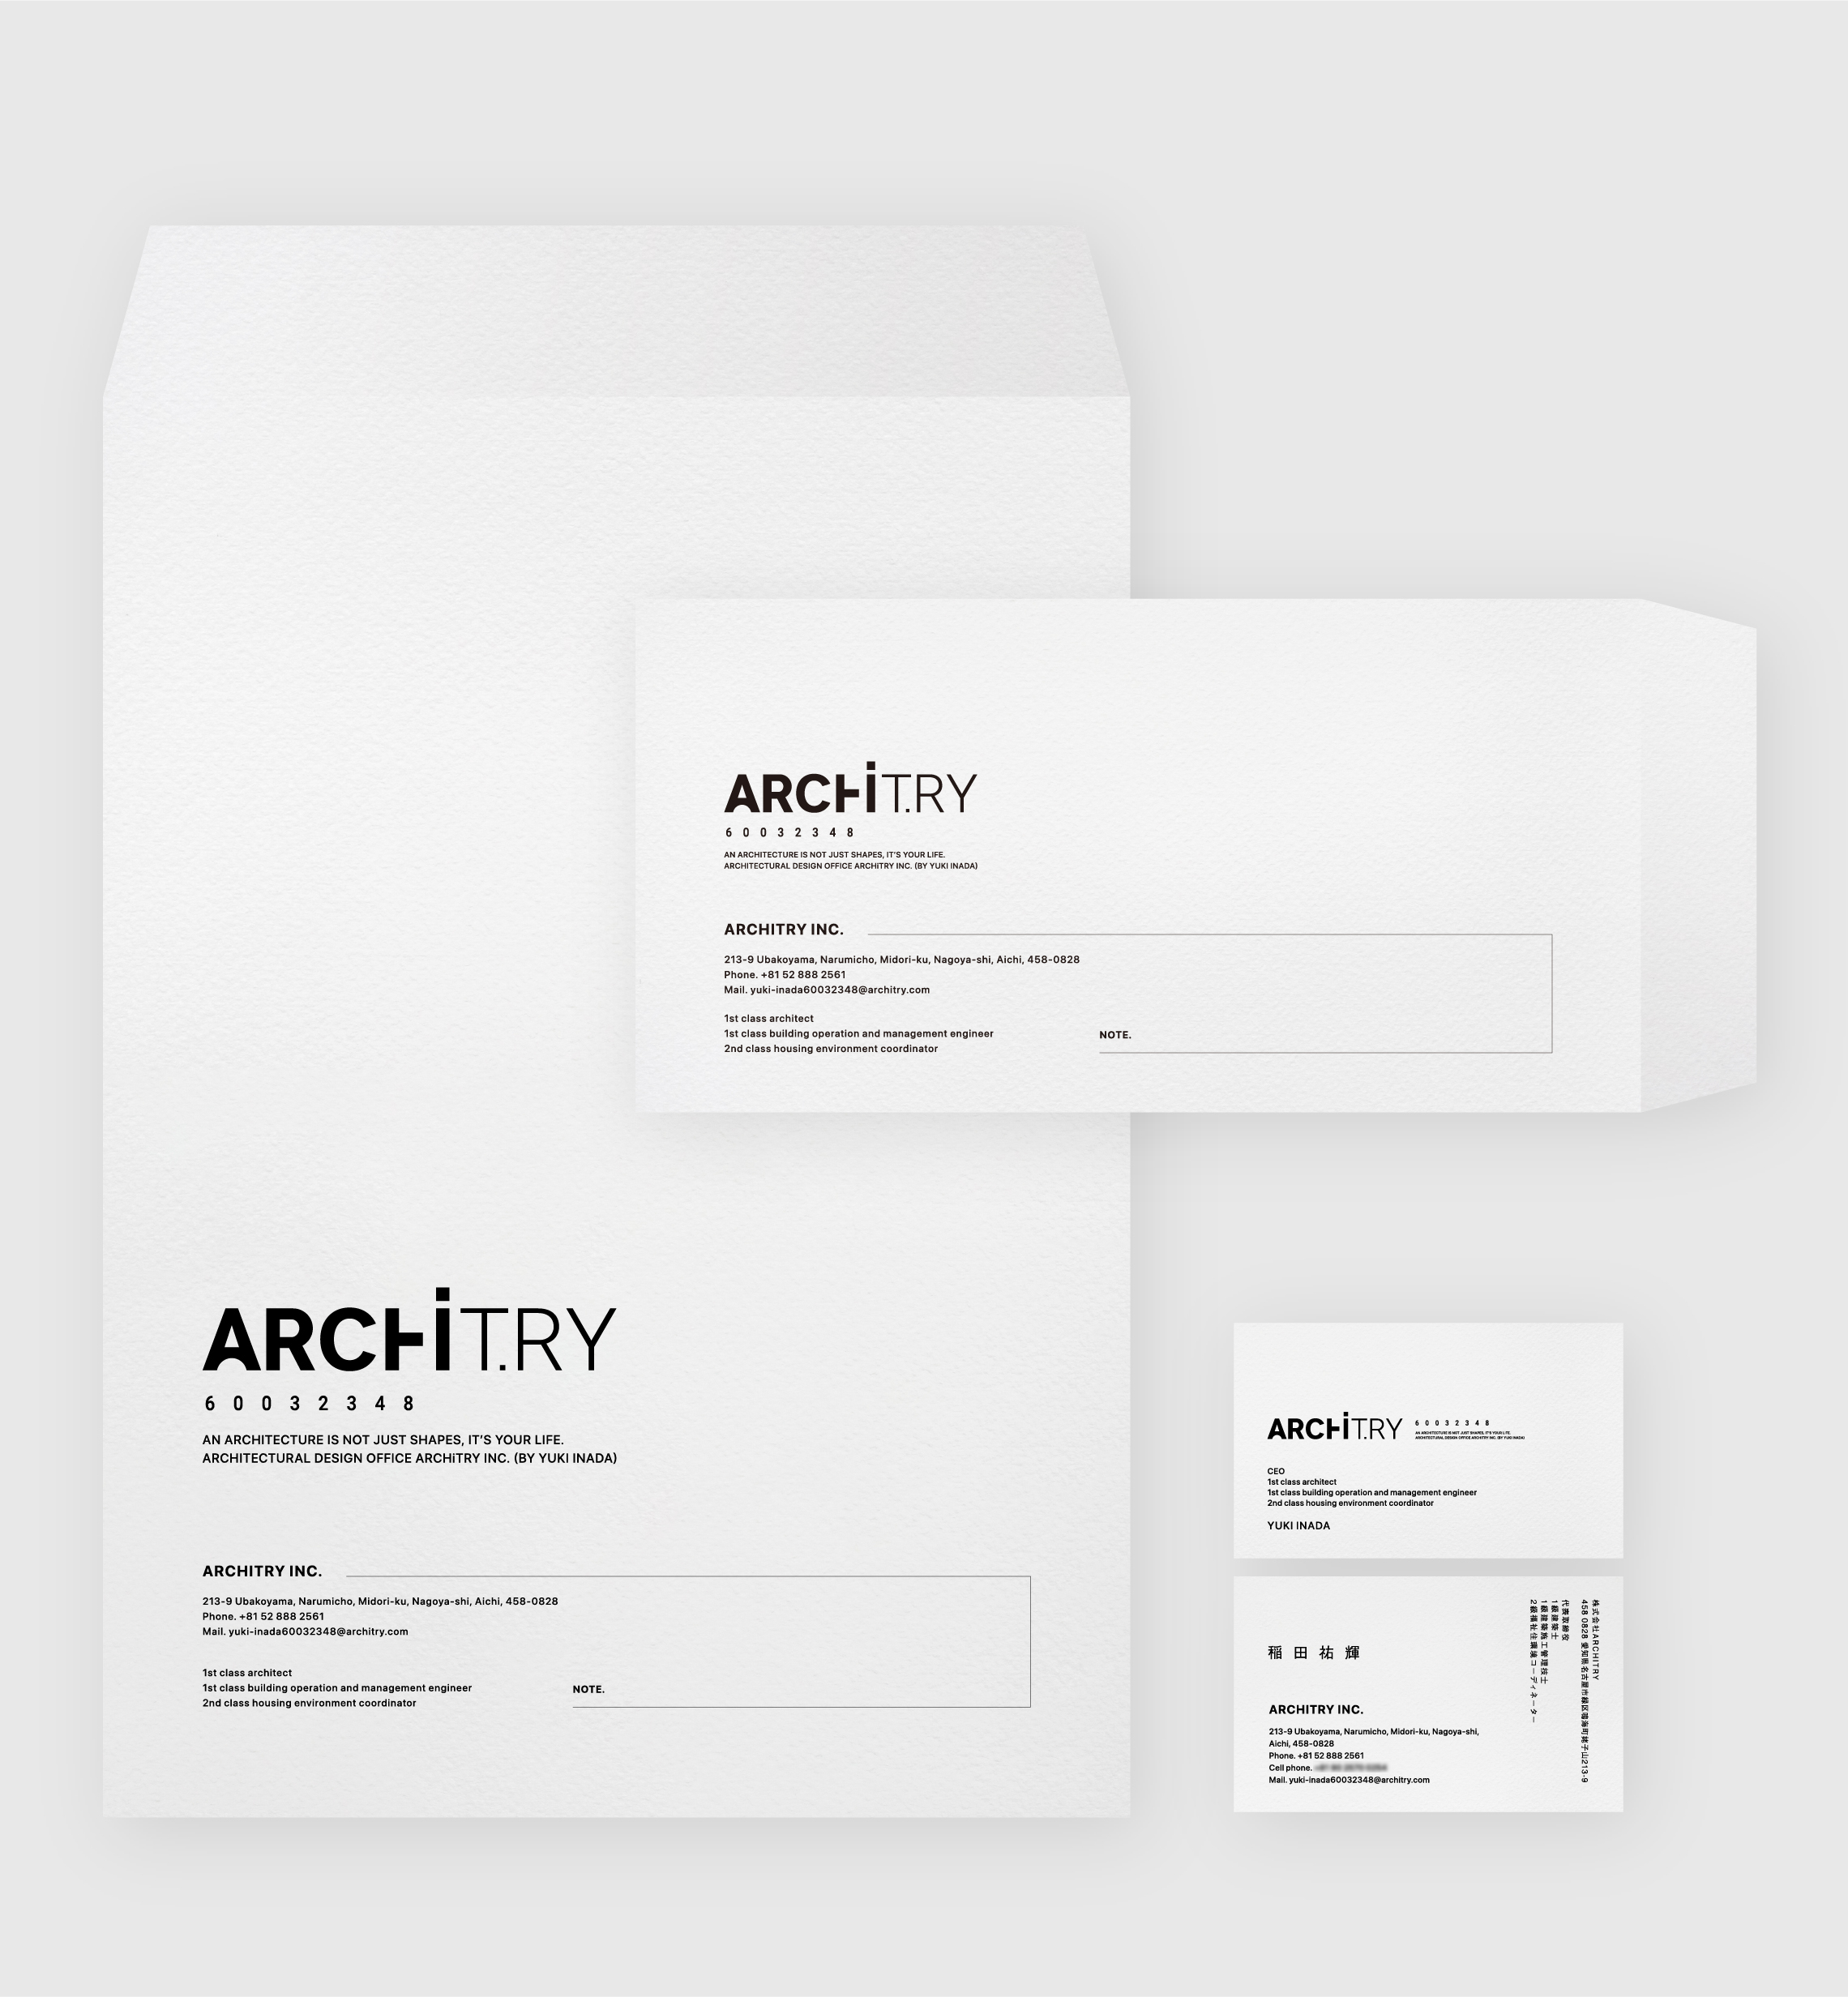 ARCHITRY 建築設計 ブランディング ロゴデザイン 名刺・封筒デザイン